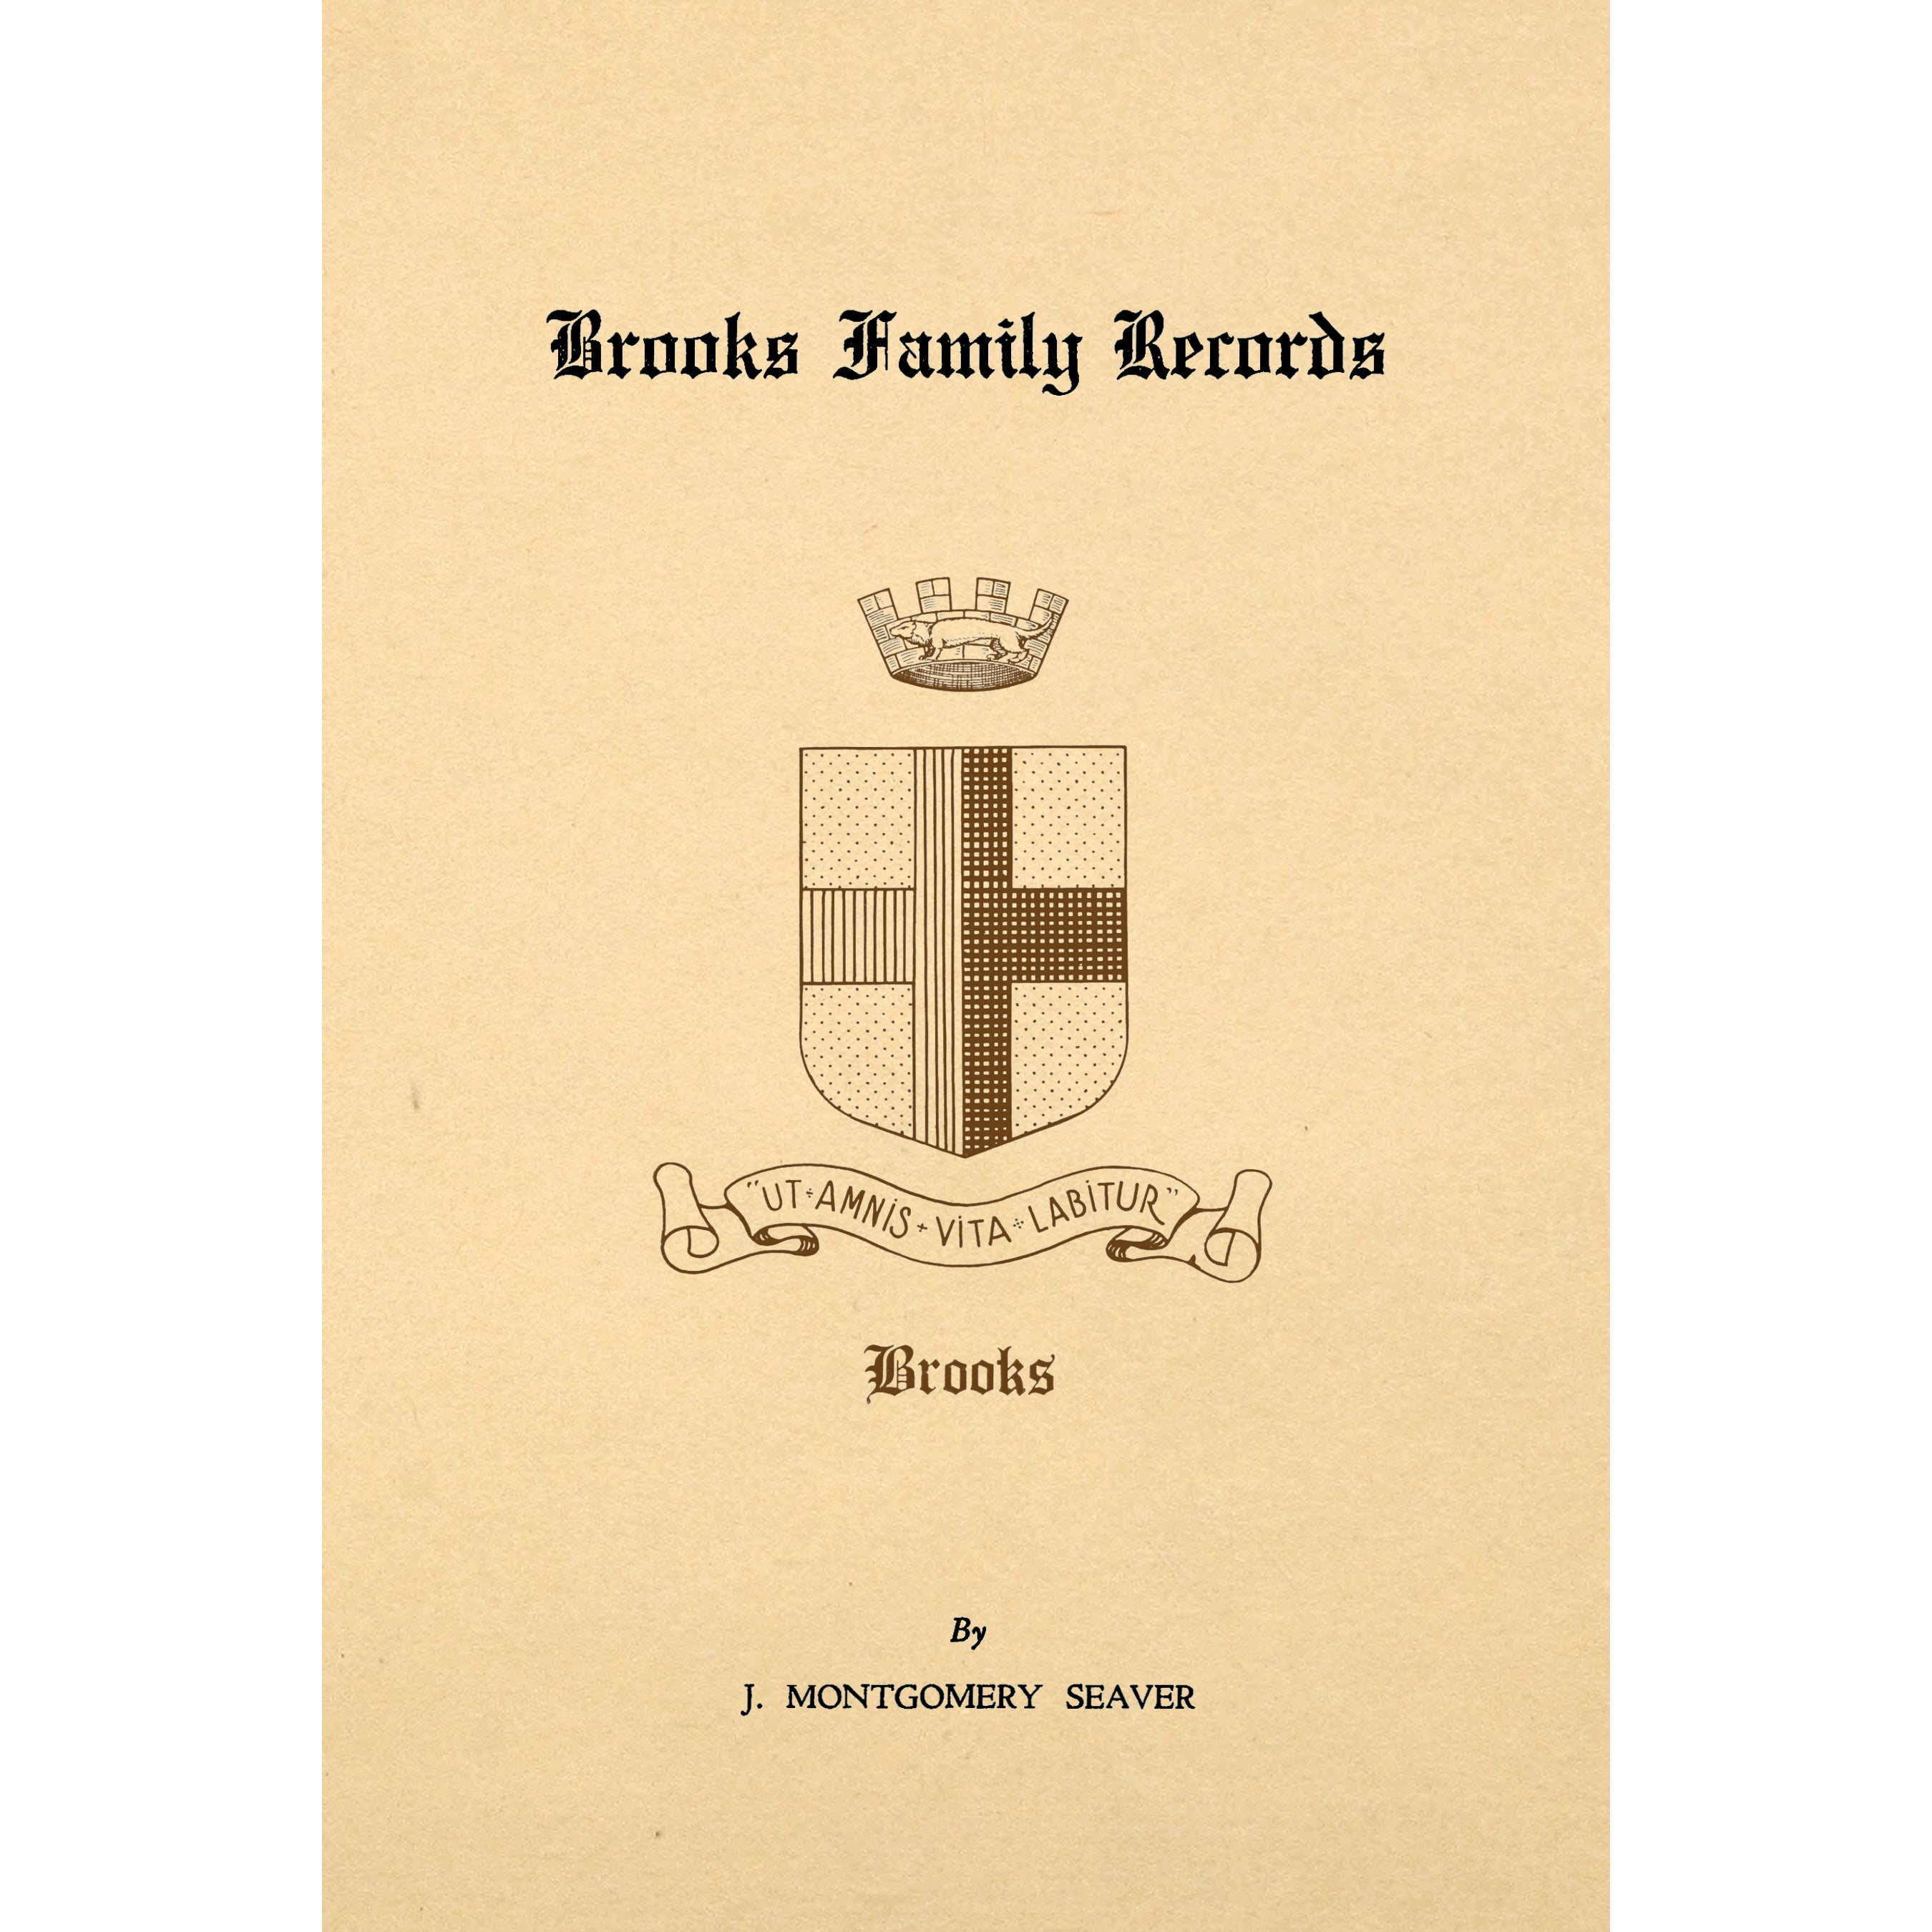 Brooks family records